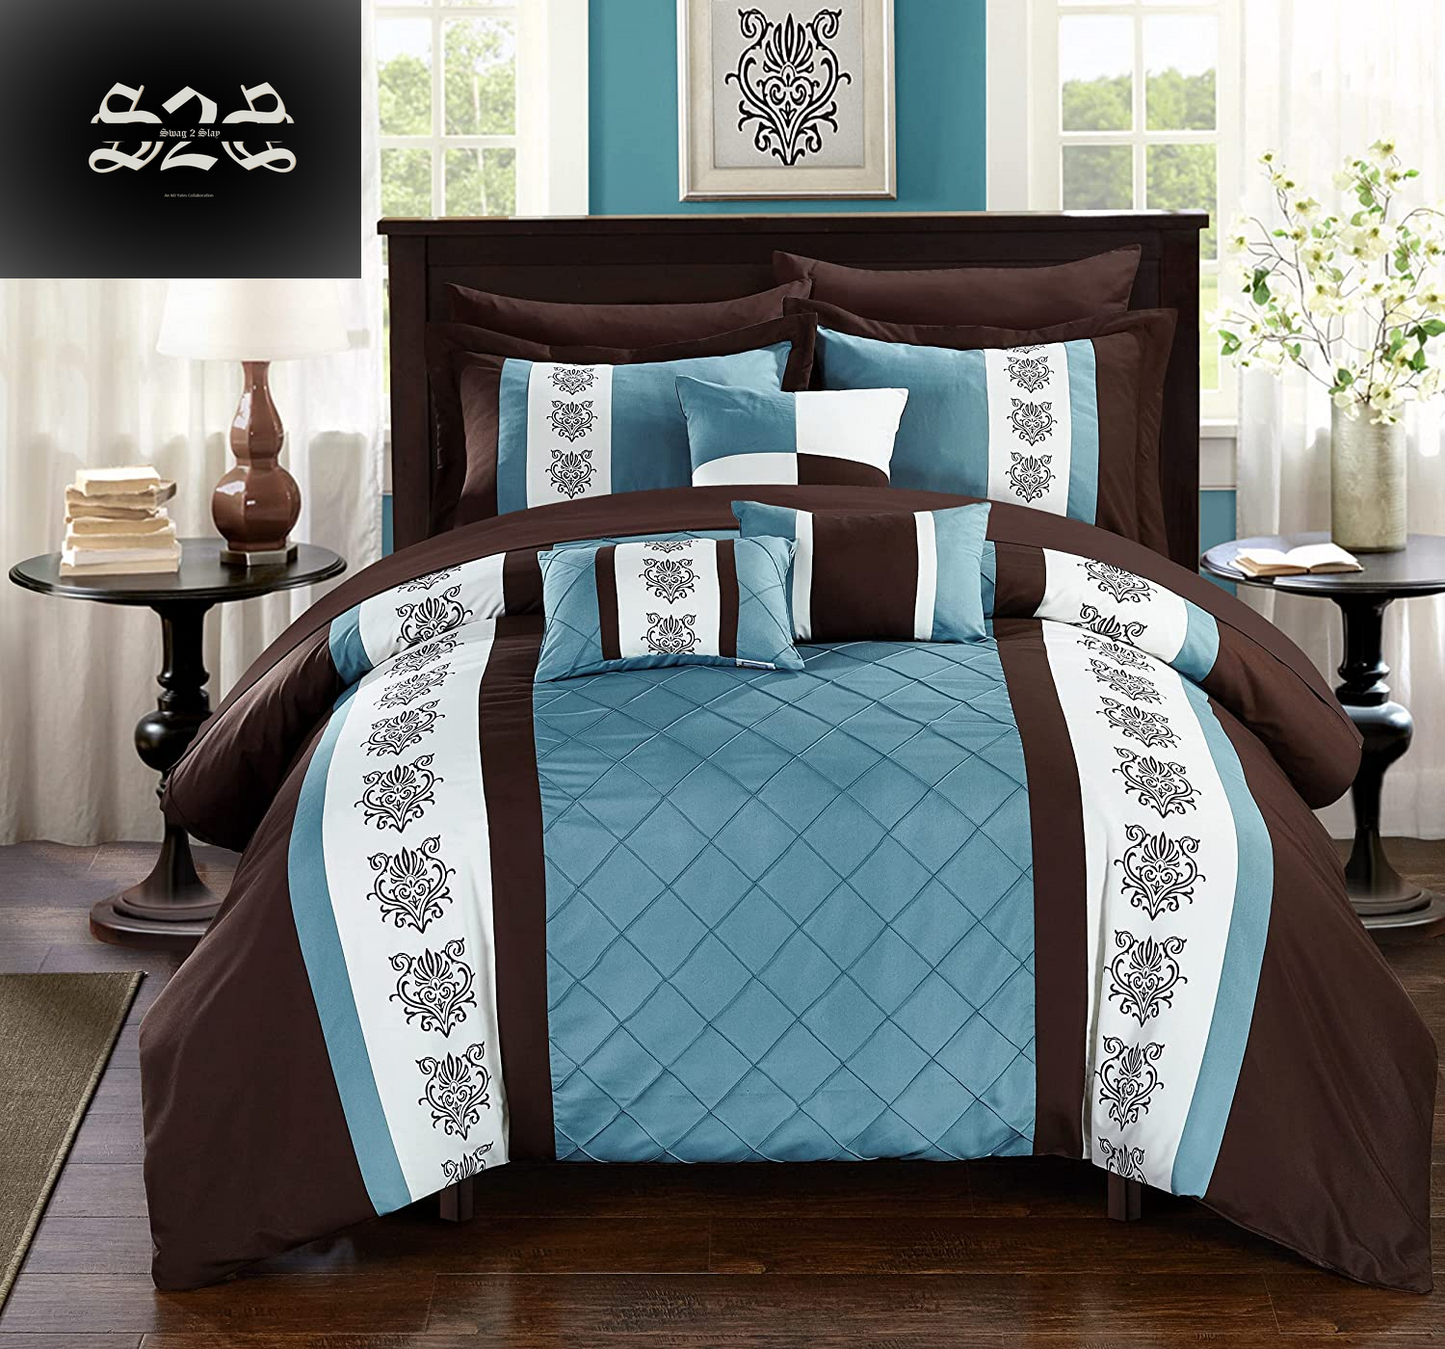 10-Piece Comforter Set